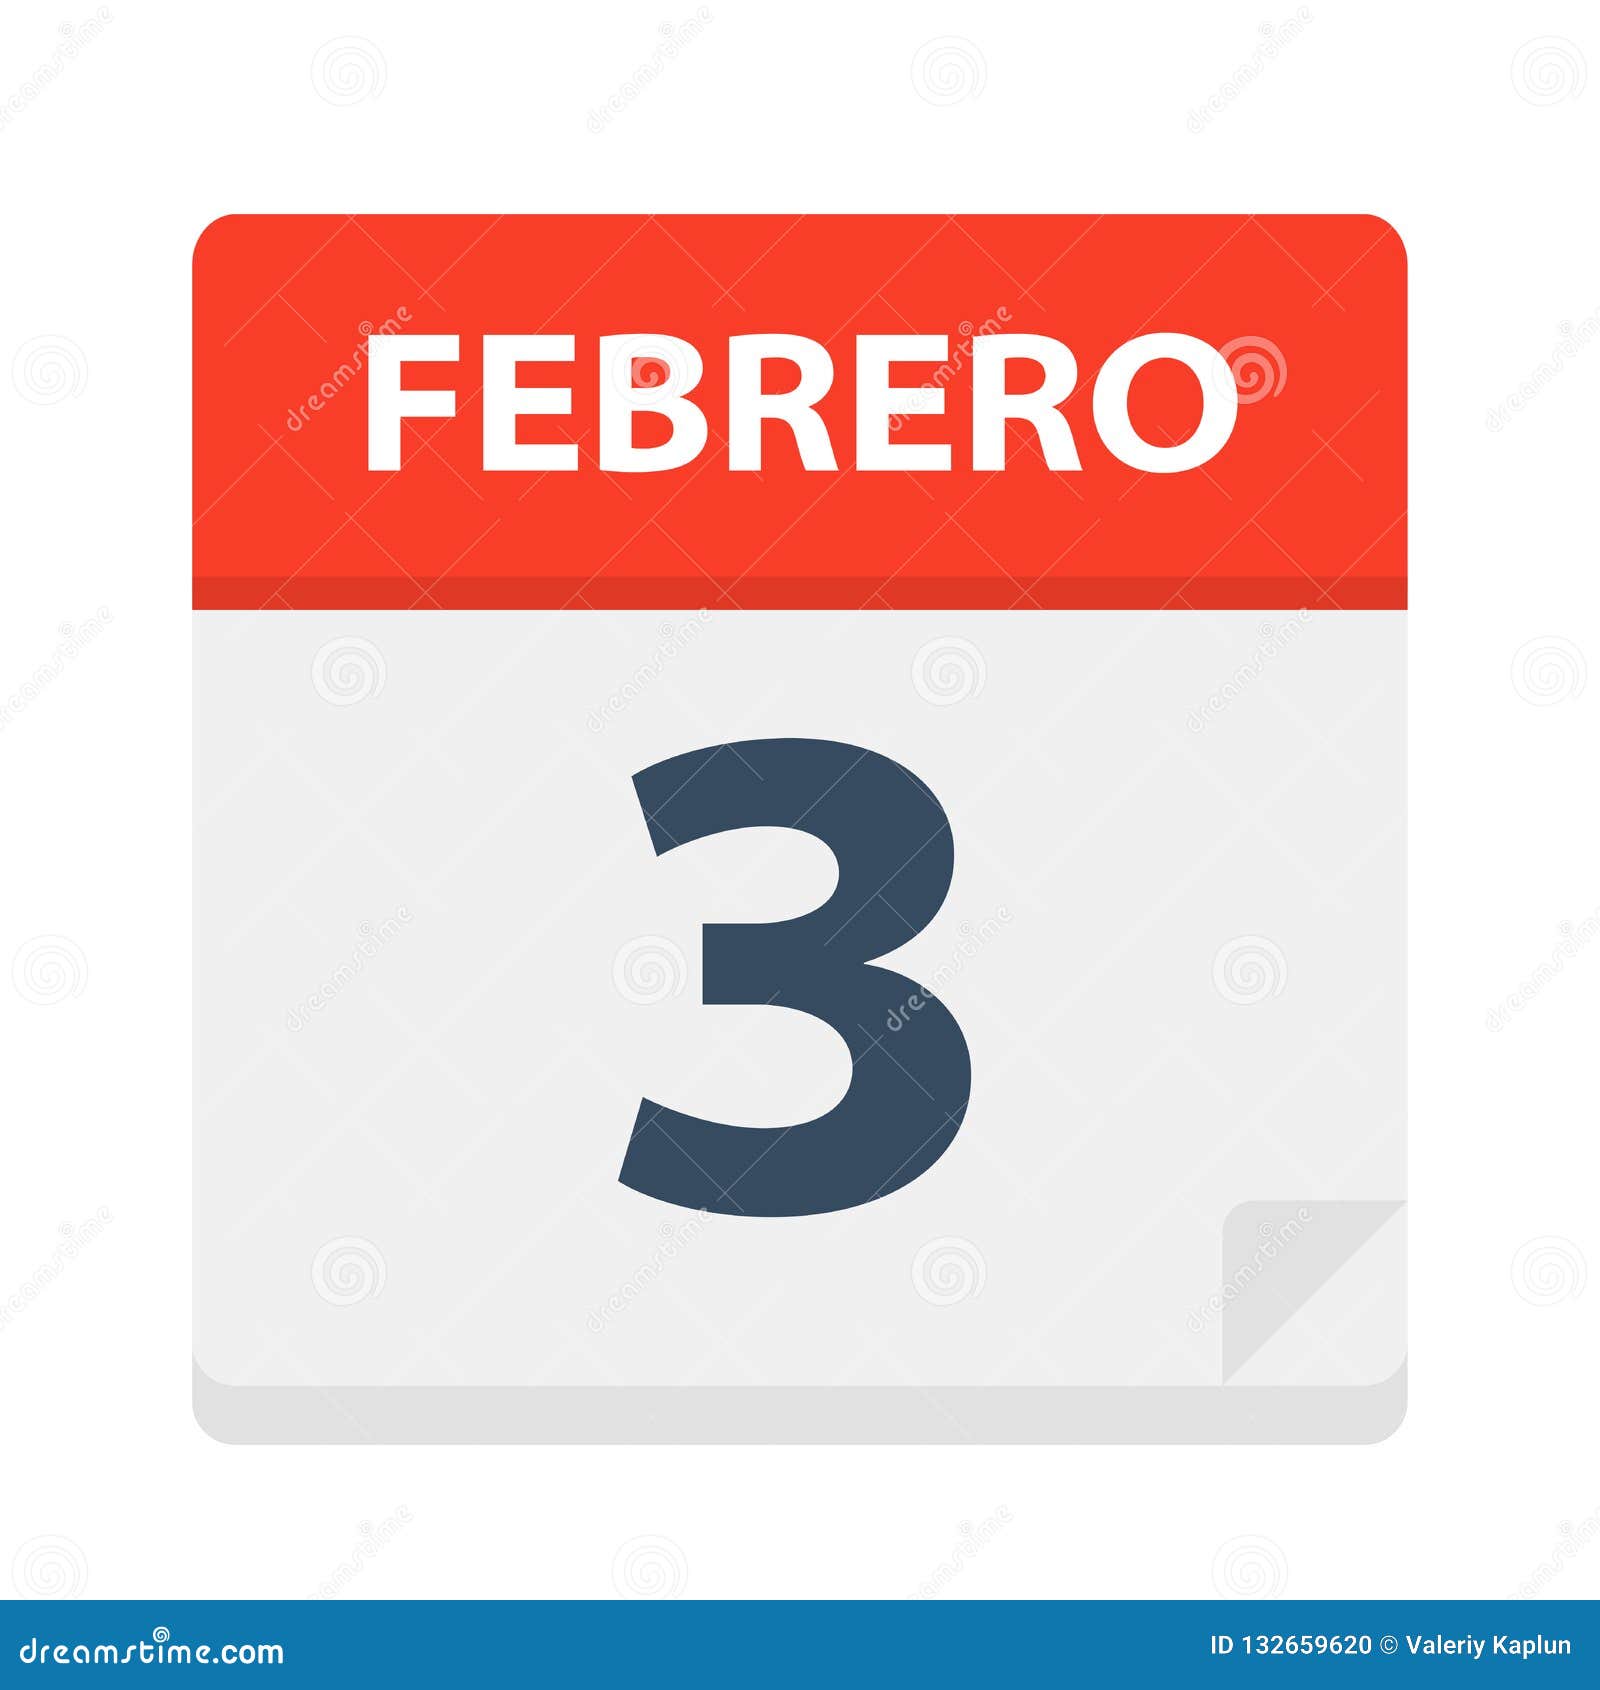 febrero 3 - calendar icon - february 3.   of spanish calendar leaf